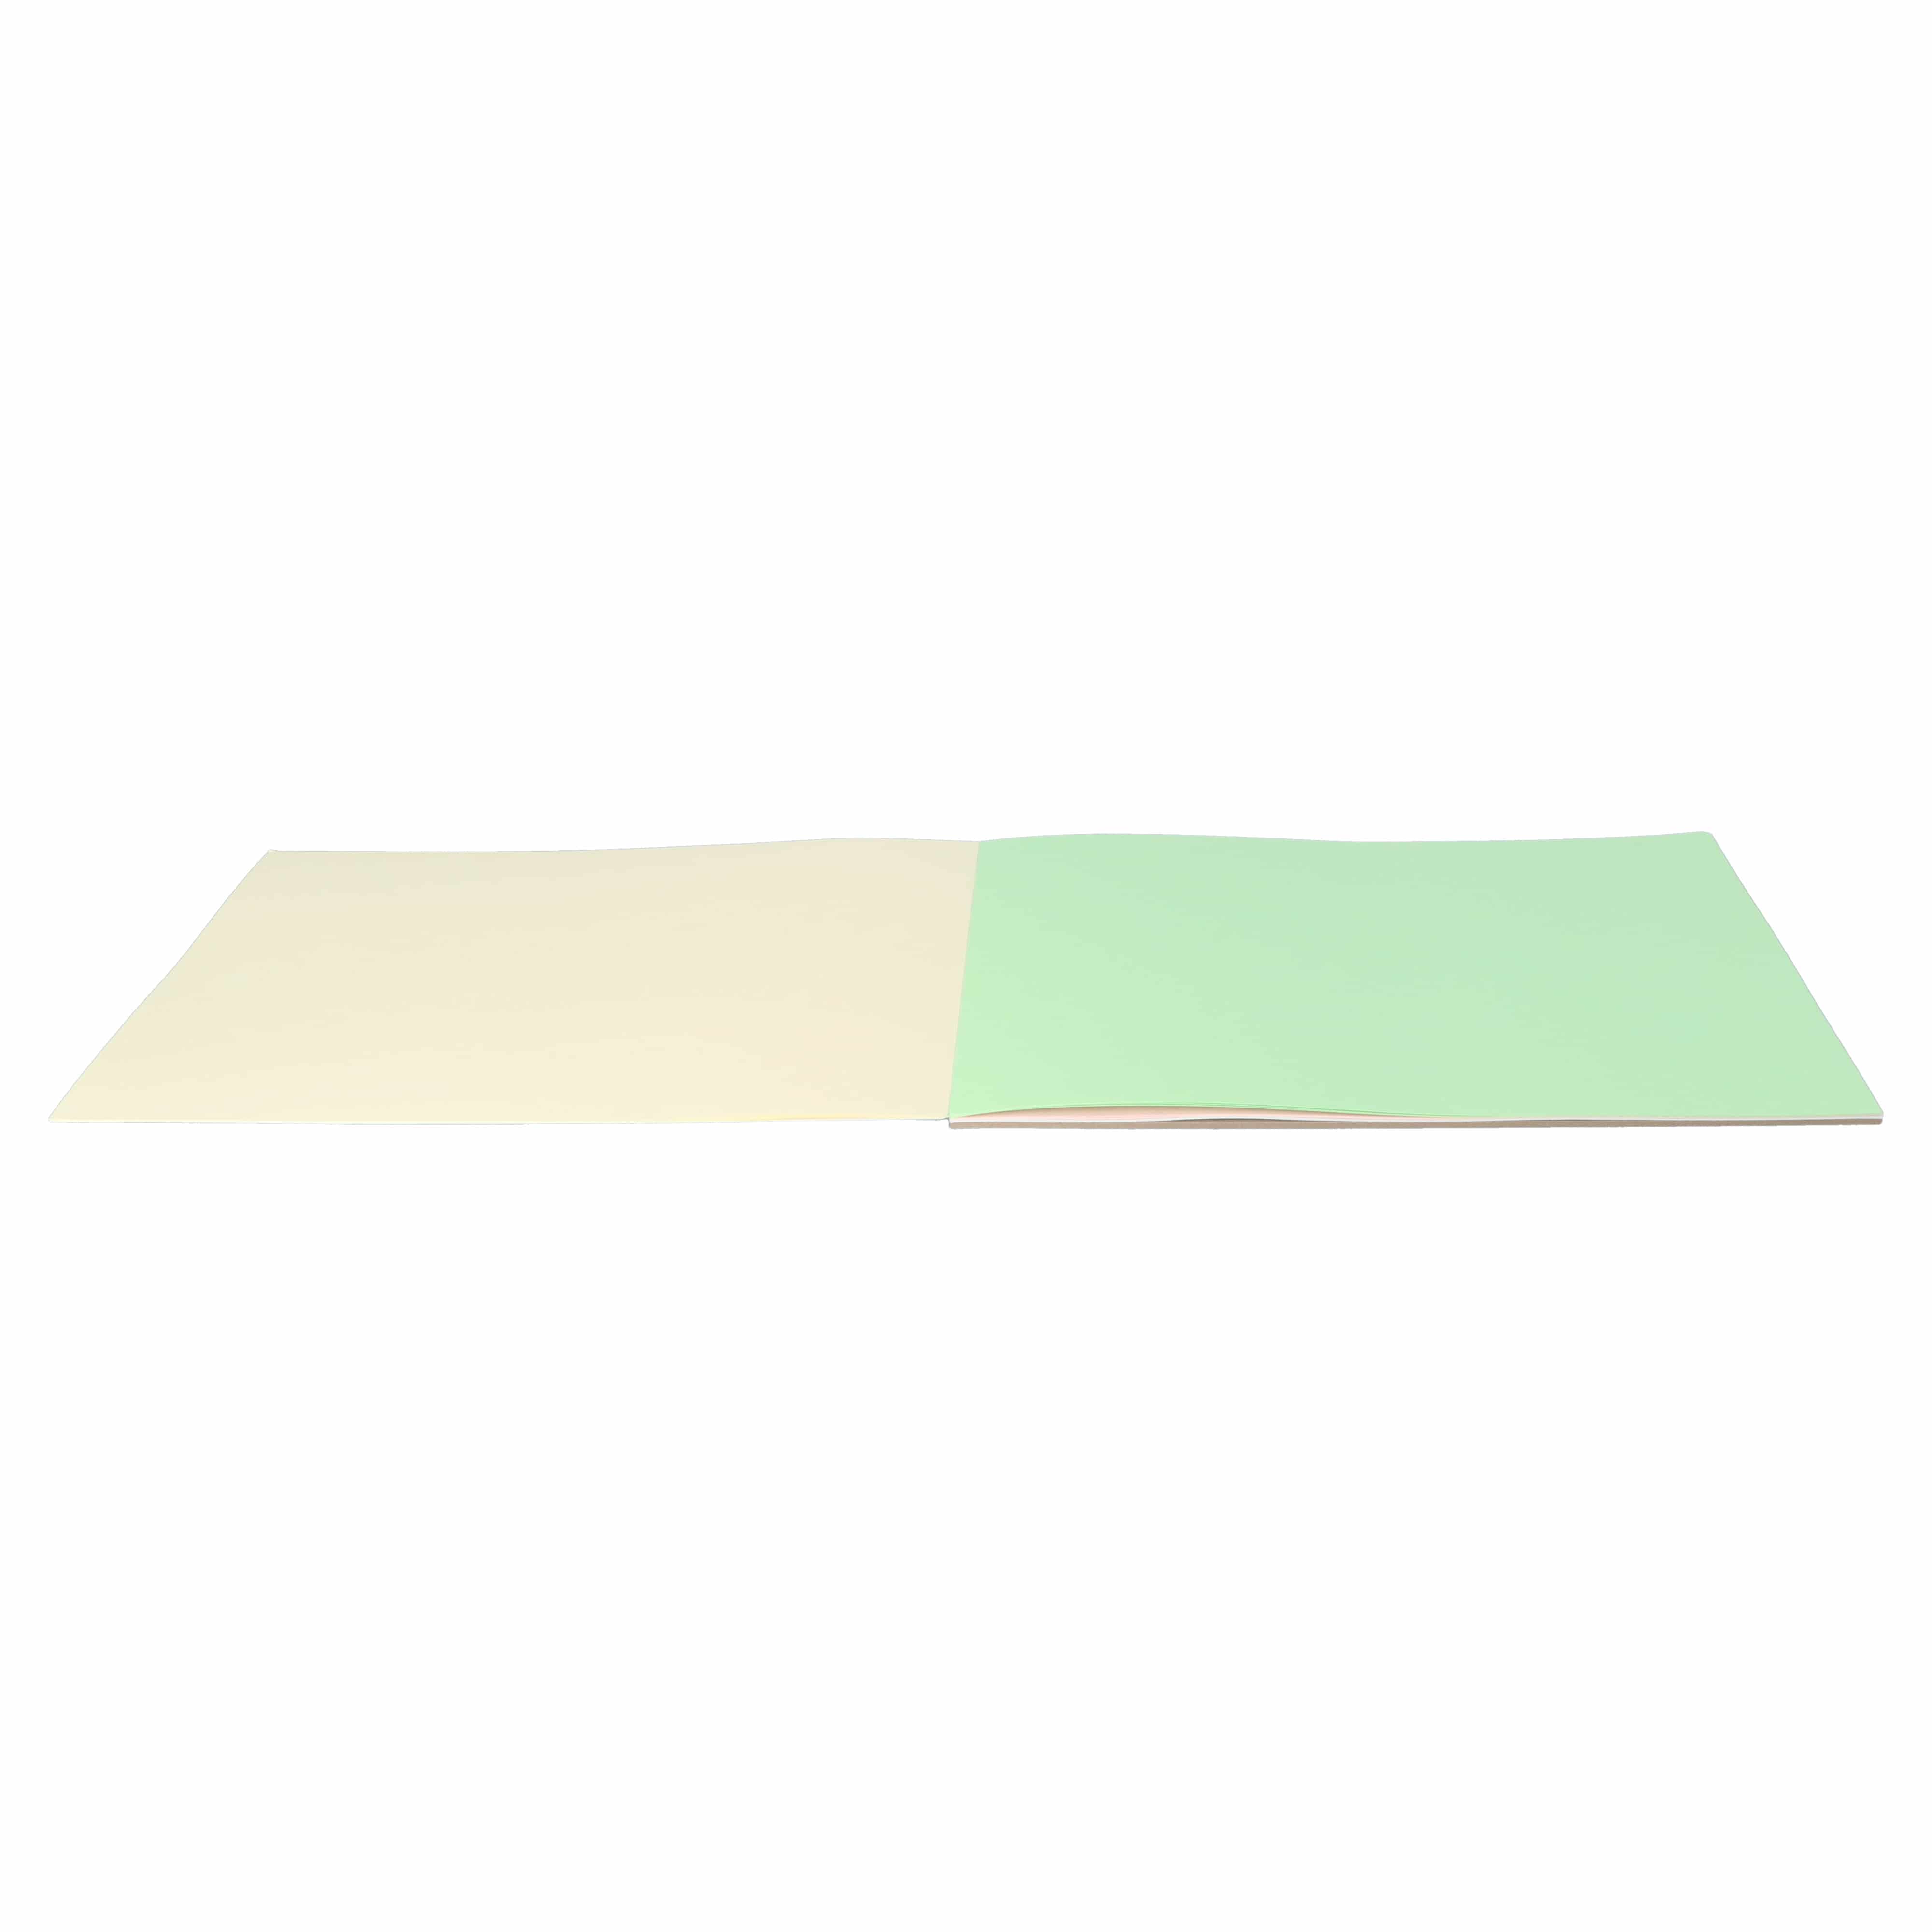 Mont Marte® Pastelpapier 4 kleuren 180 grams - 12 vel A4